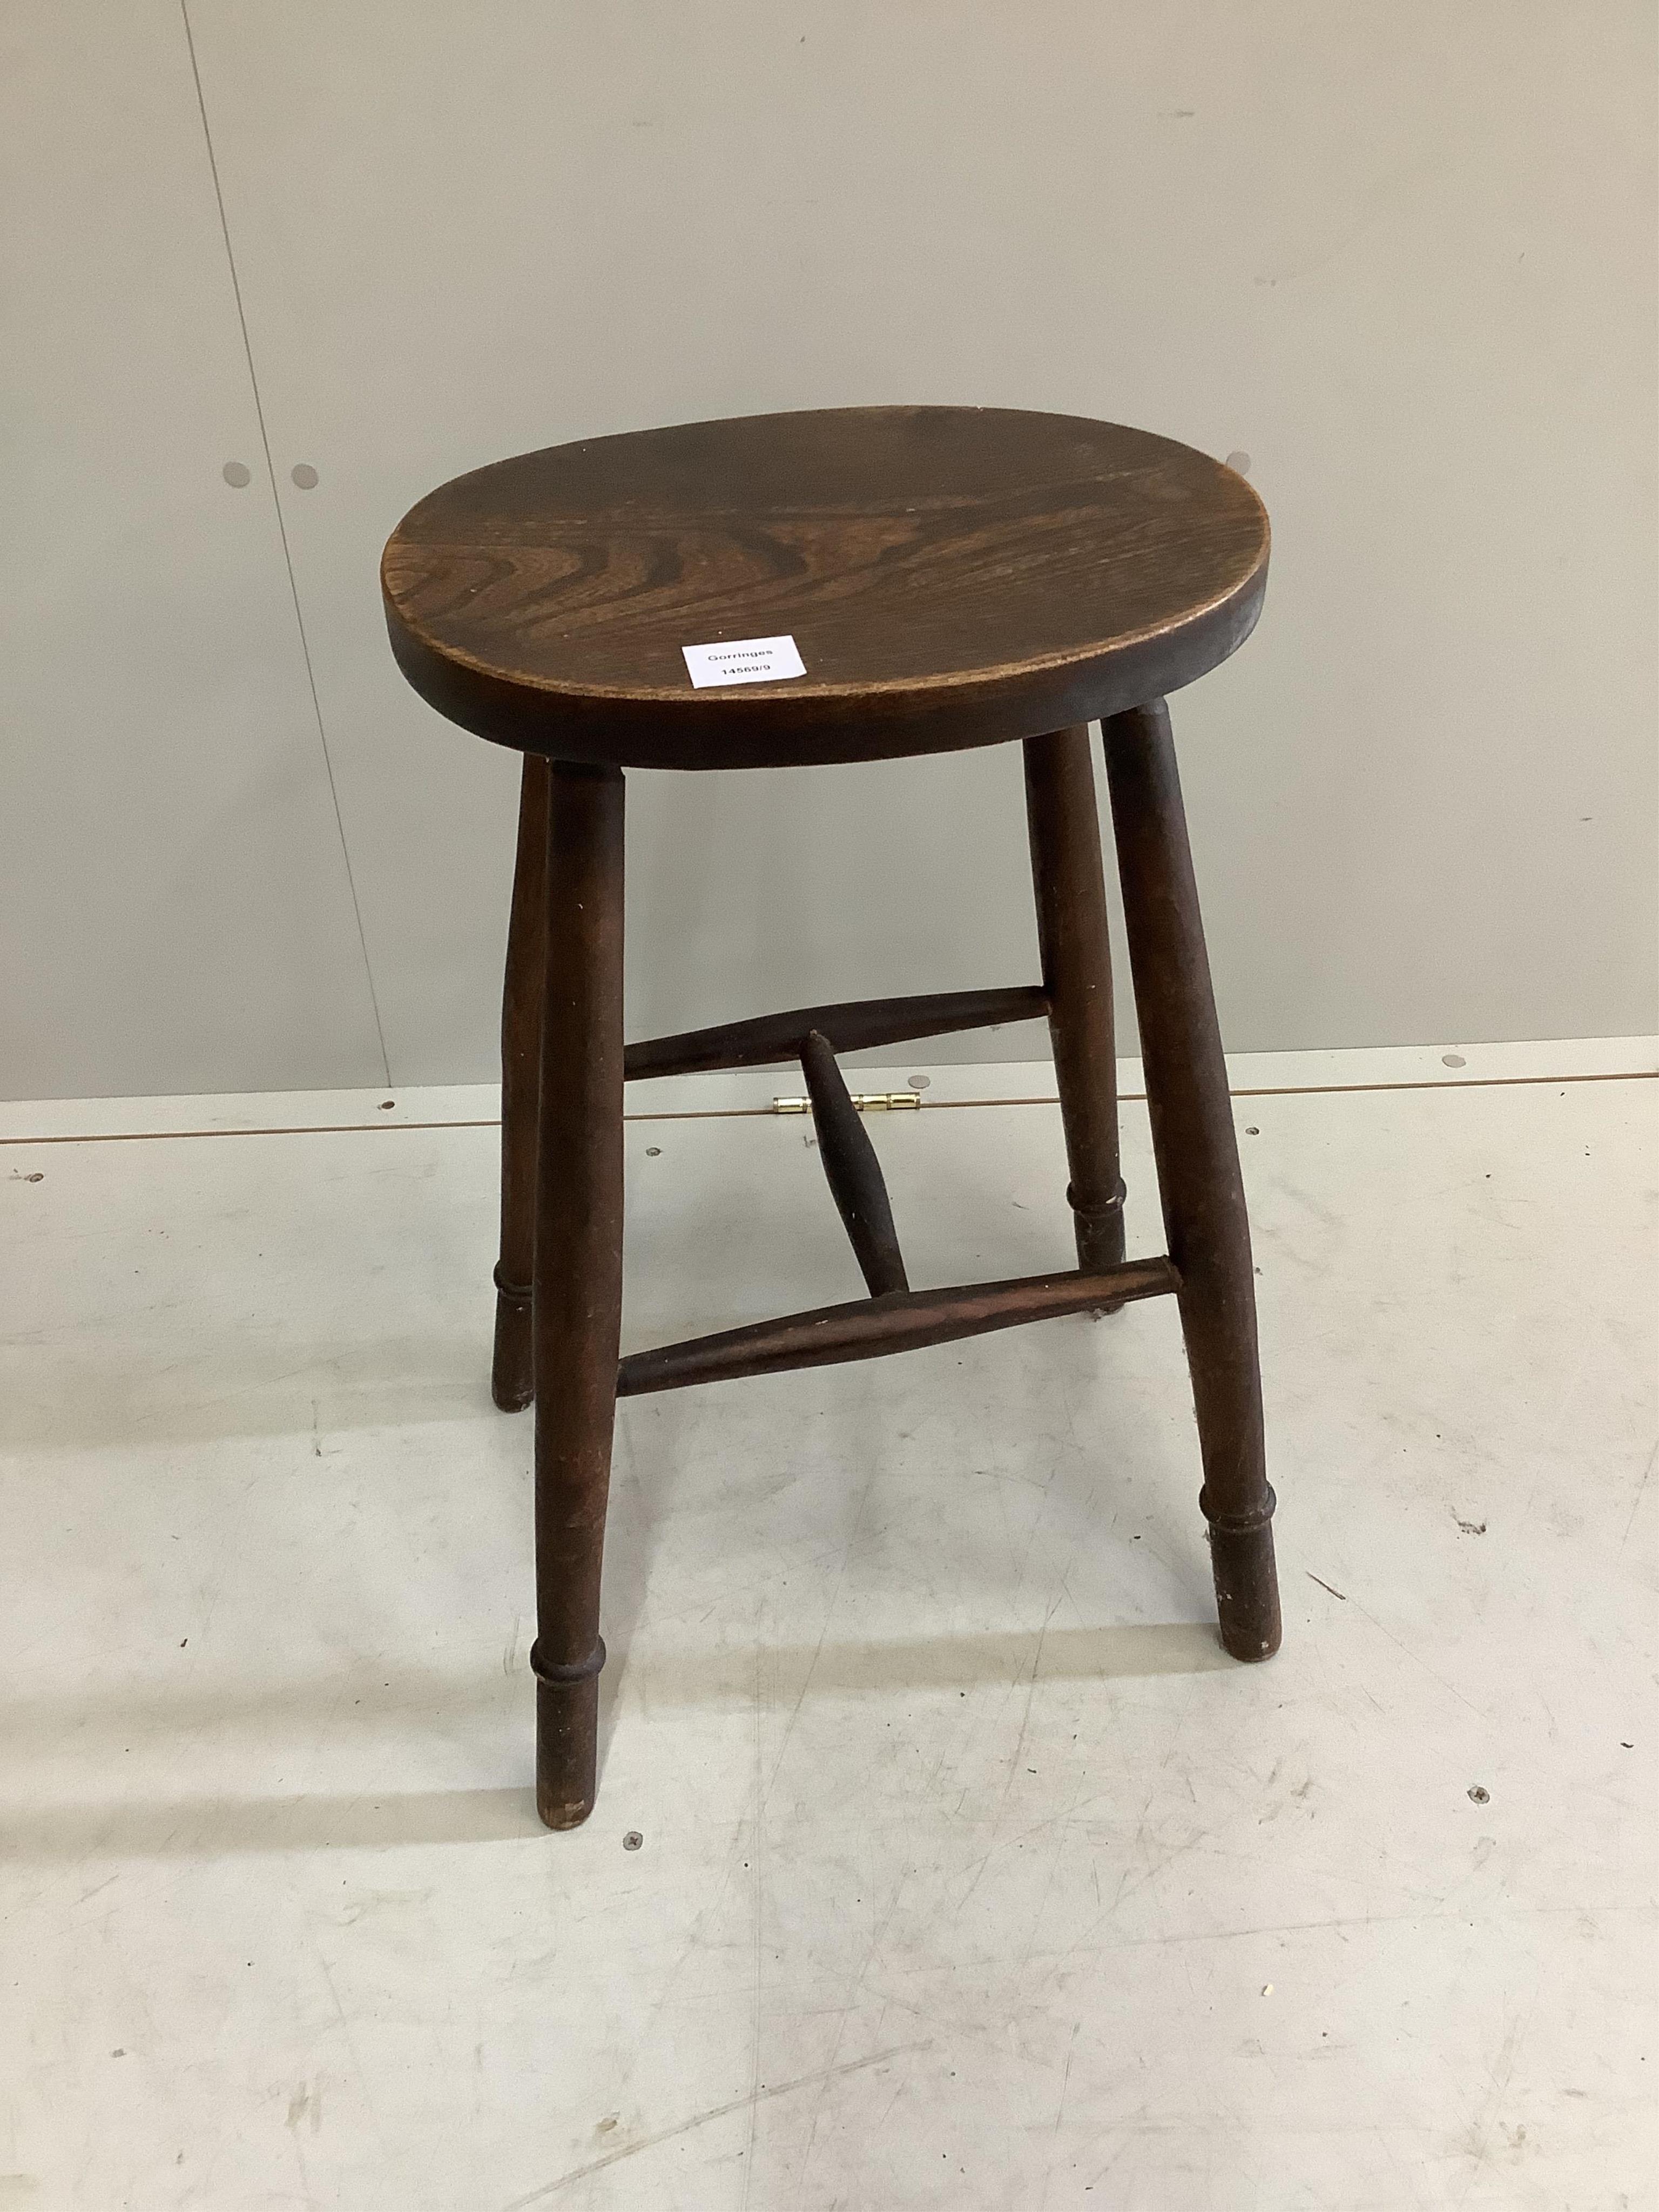 A Provincial elm and beech stool, width 35cm, height 61cm. Condition - fair